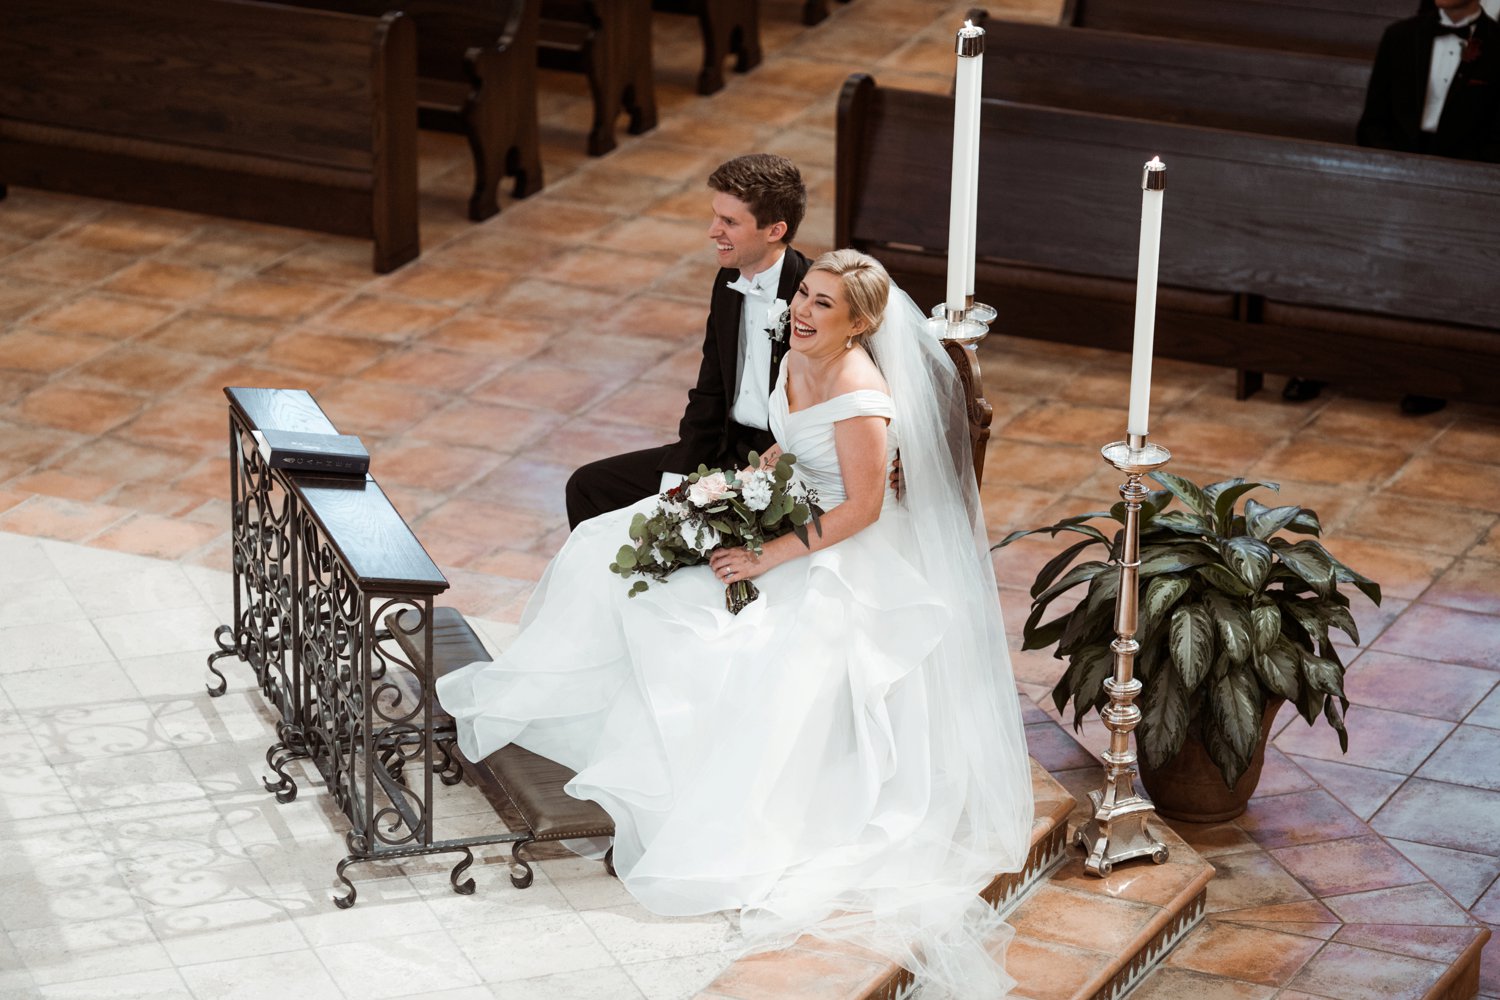  images by feliciathephotographer.com | destination wedding photographer | kansas city | summertime | classic | ceremony | visitation church | catholic | laughter | bride and groom | 